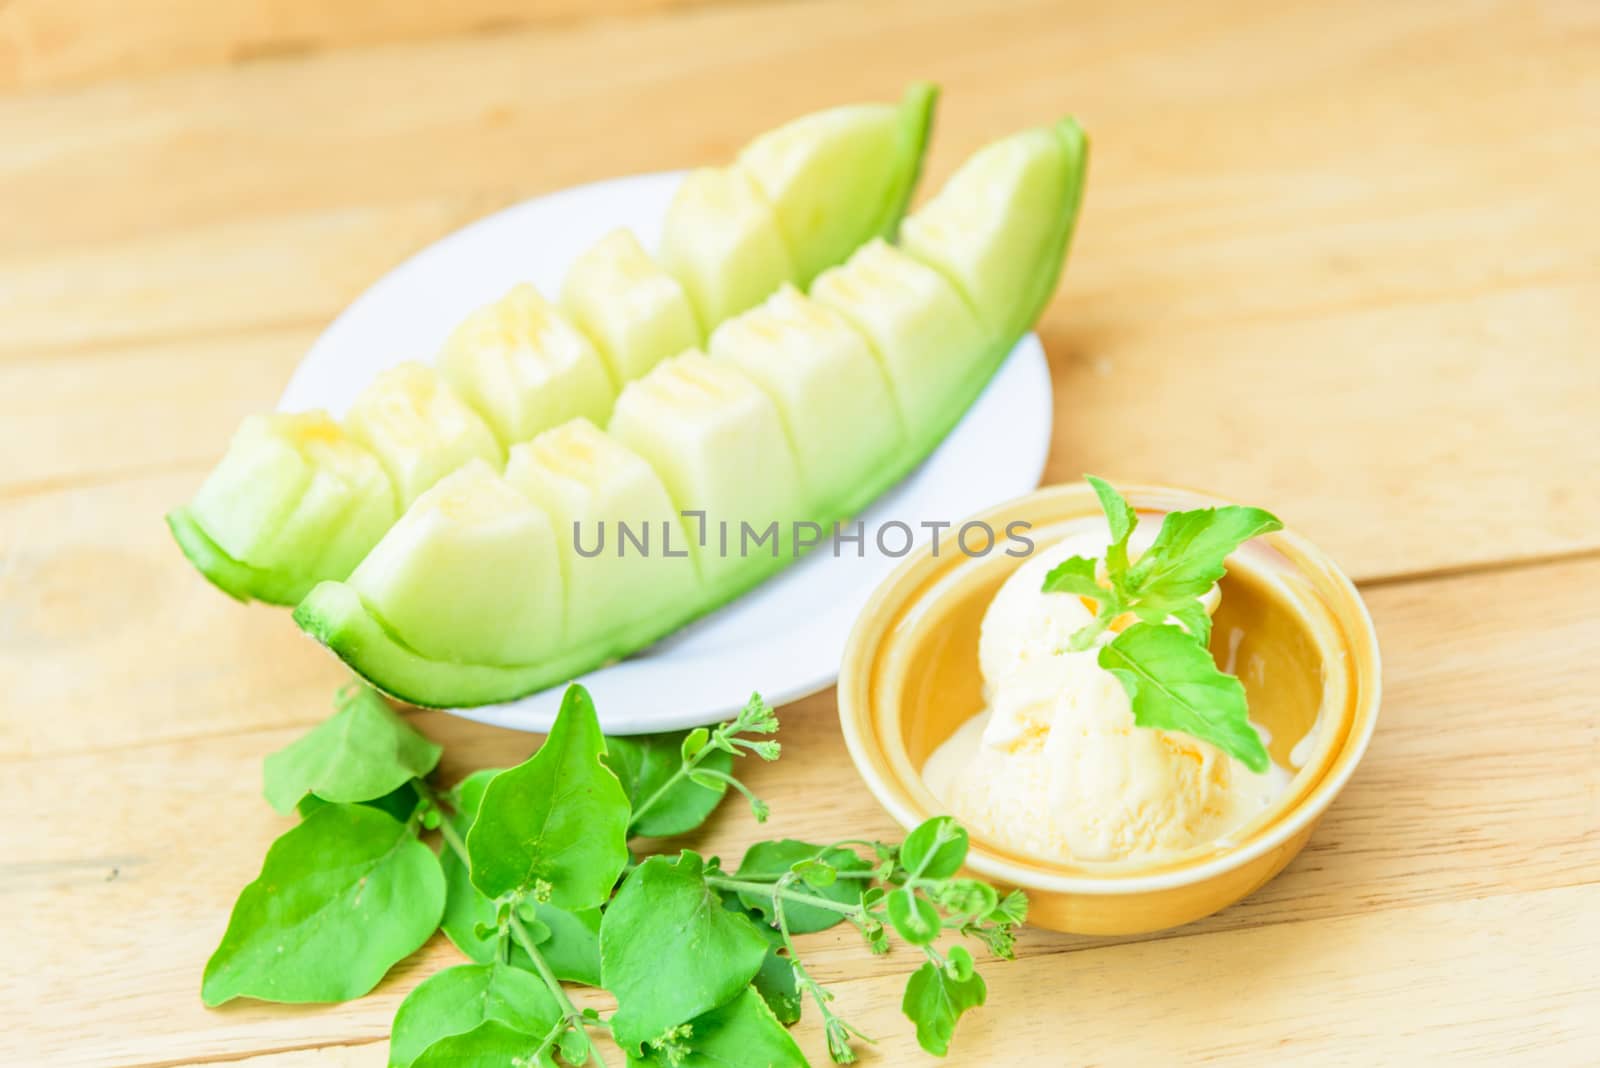 ice cream melon on wood table by rukawajung